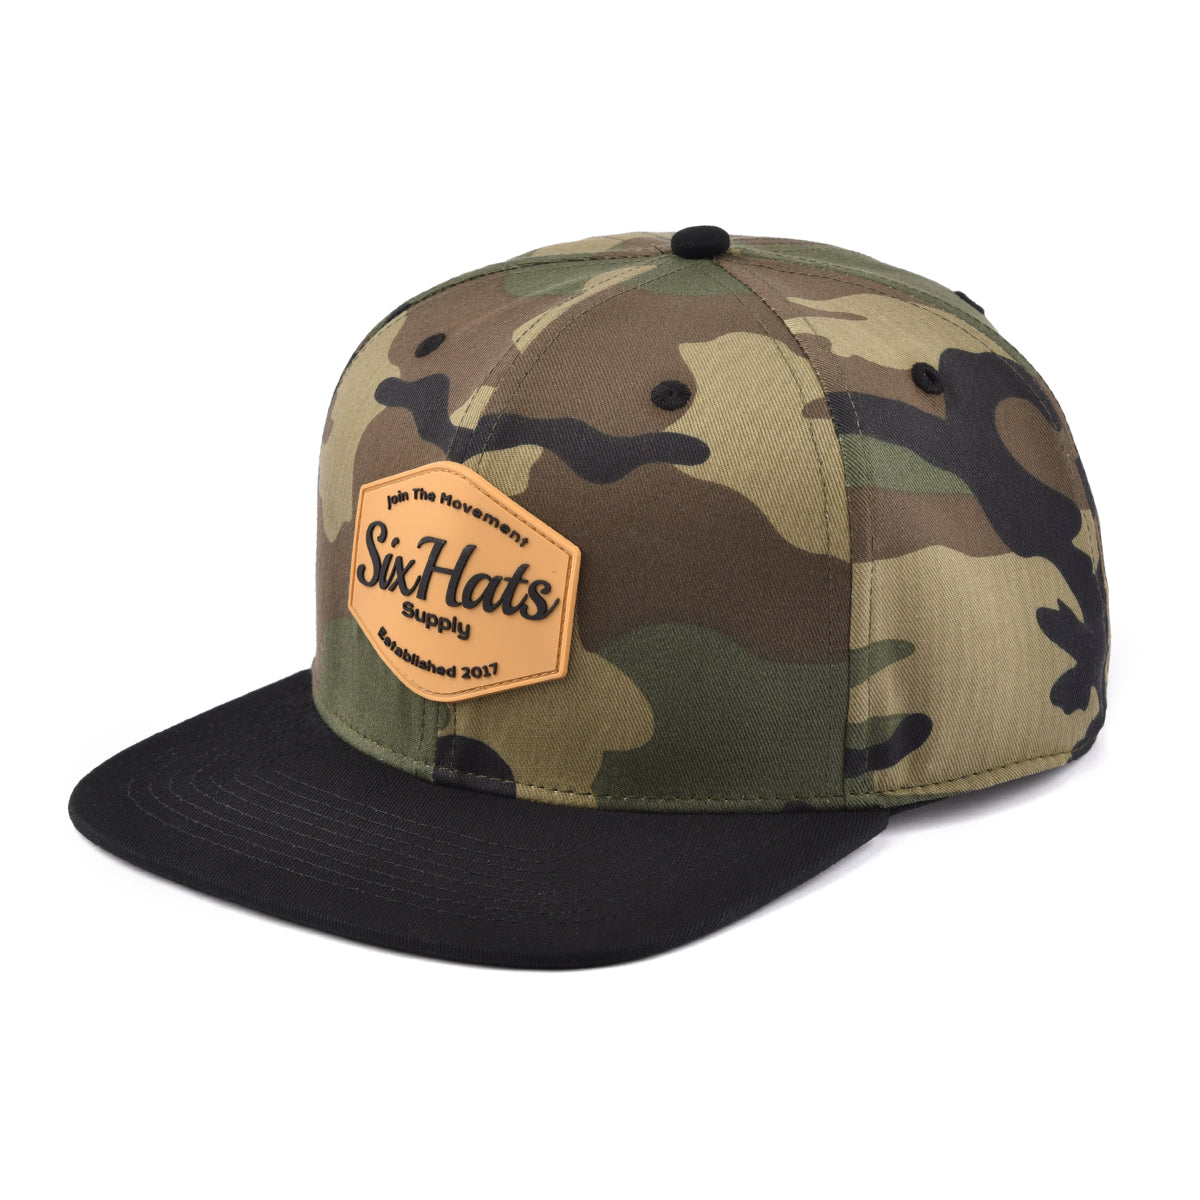 verbanning viool opwinding Signature Camouflage Snapback Hat – Six Hats Supply Co